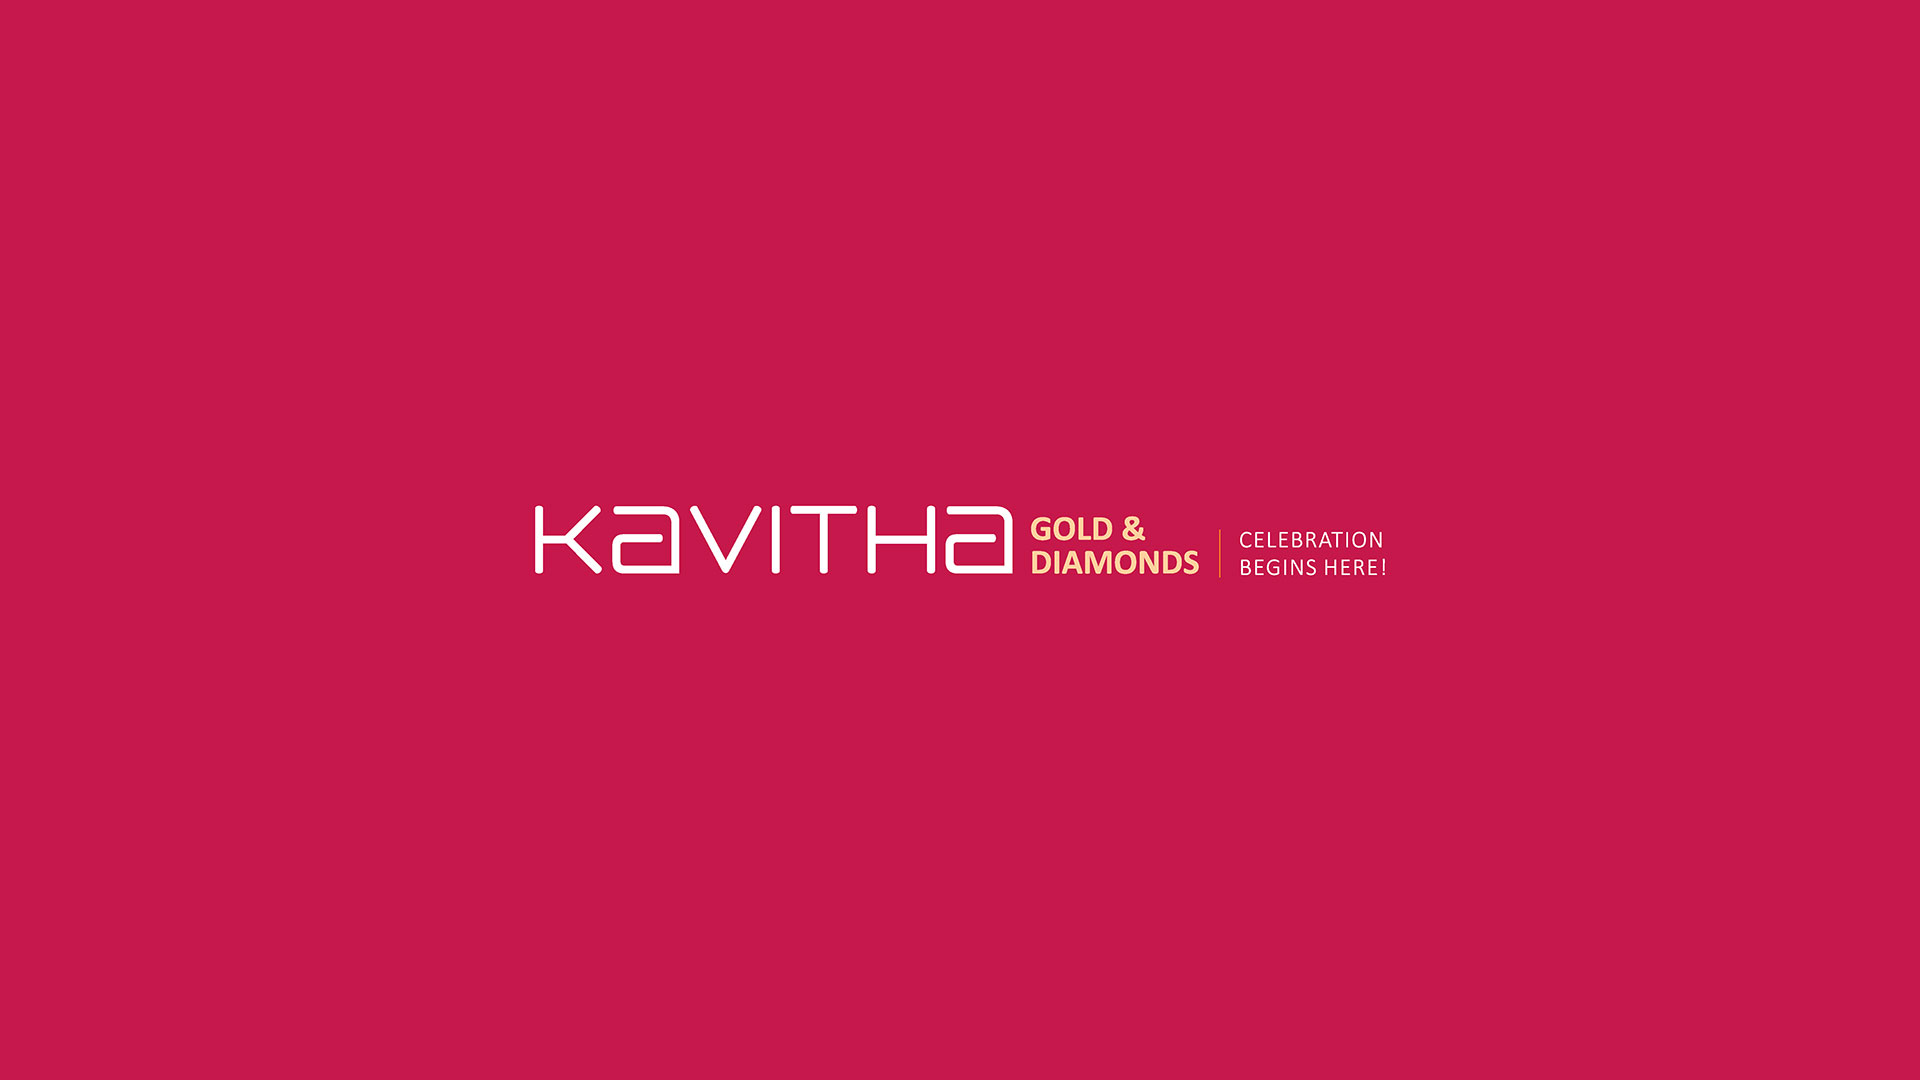 Kavtiha Gold & Diamonds Logo on red background